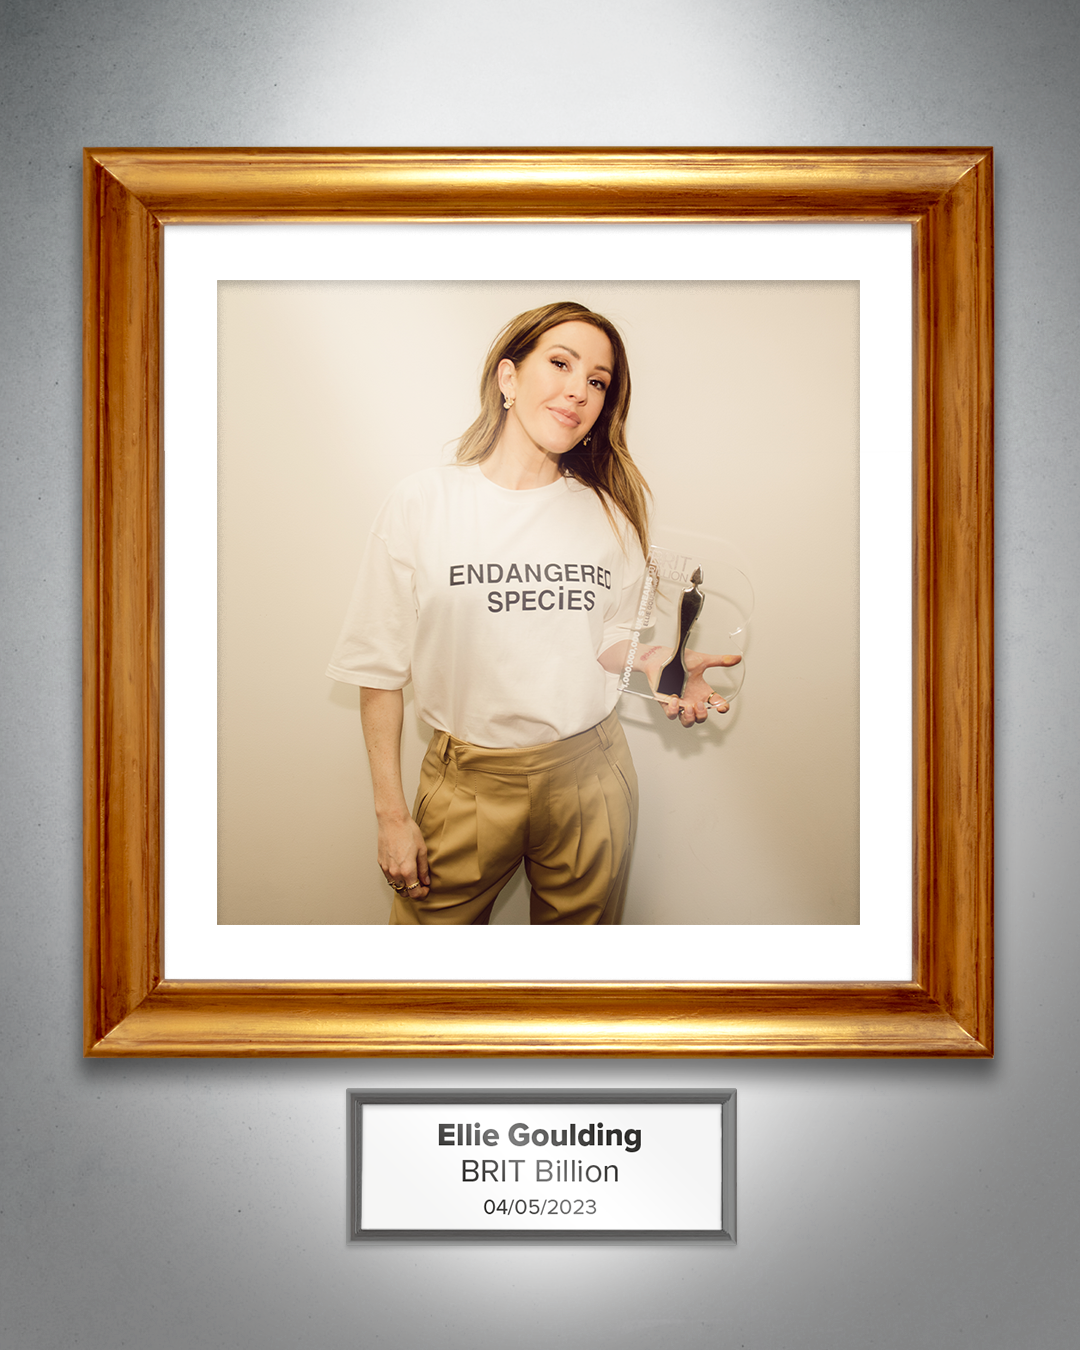 BRIT Billion: Ellie Goulding